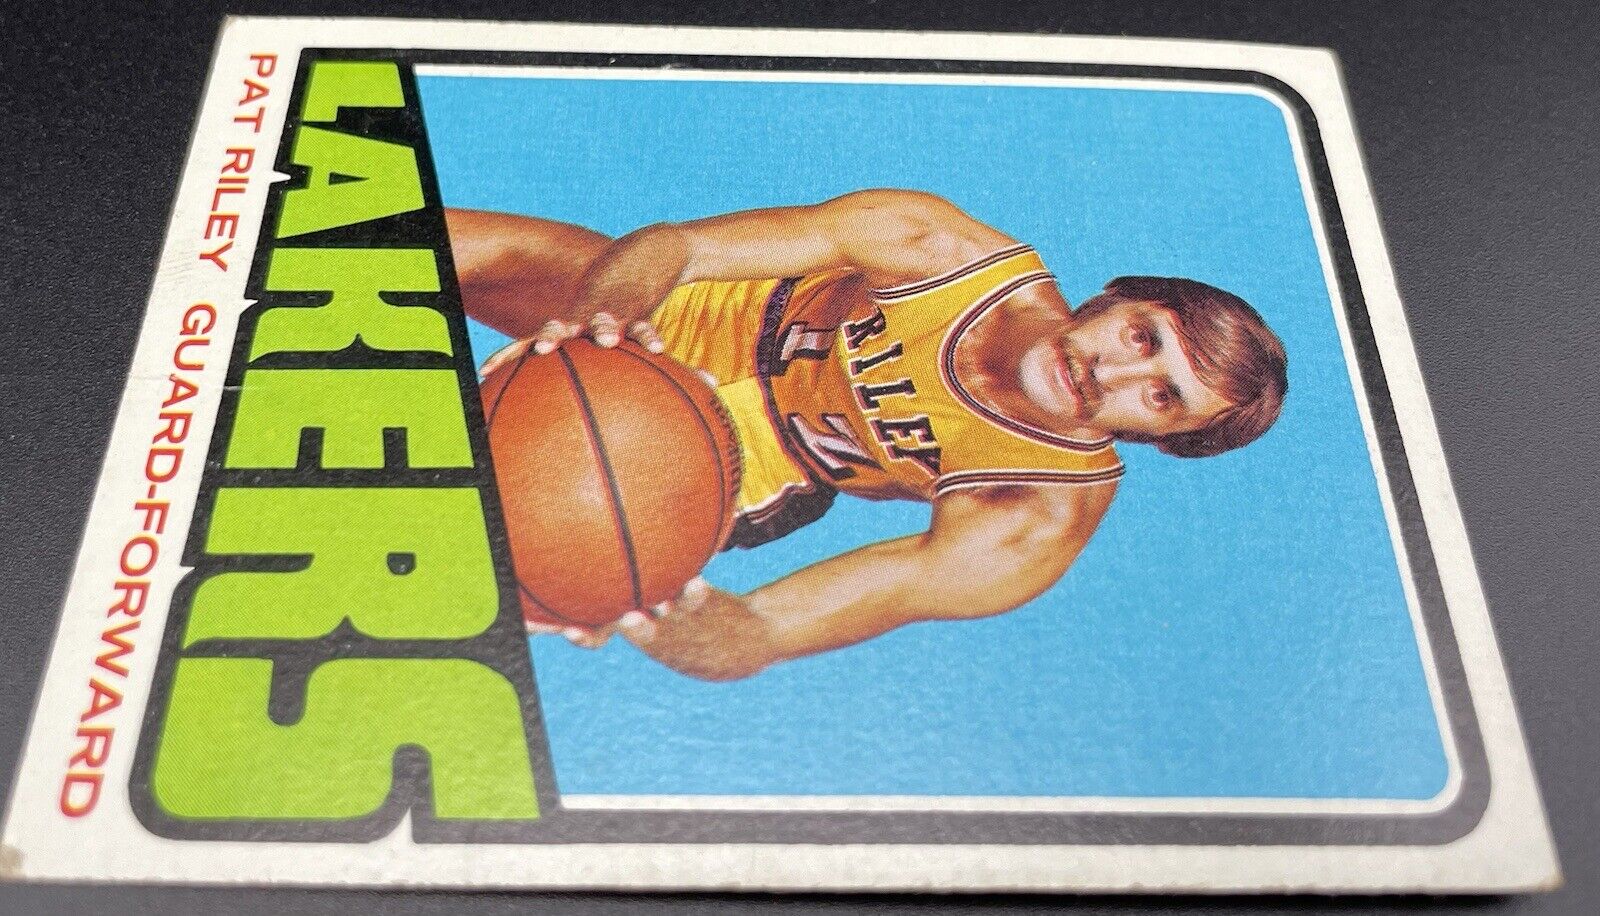 Pat Riley 1972 Topps #144 Los Angeles Lakers HOF, Five Time Nba Champion!!￼￼